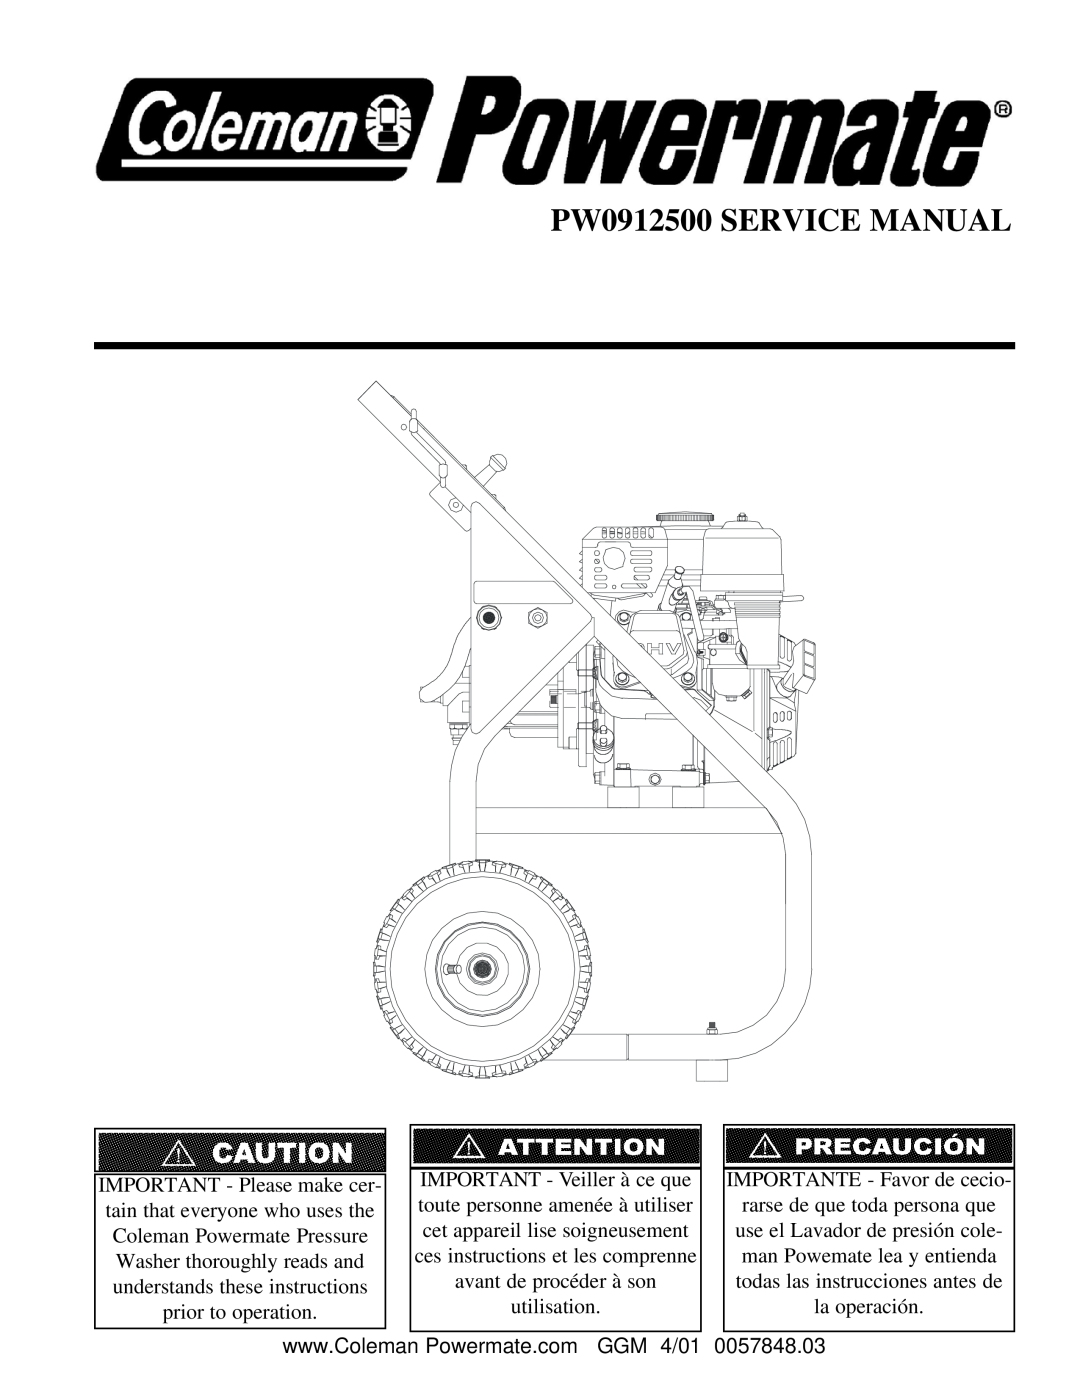 Coleman PW0912500 service manual 